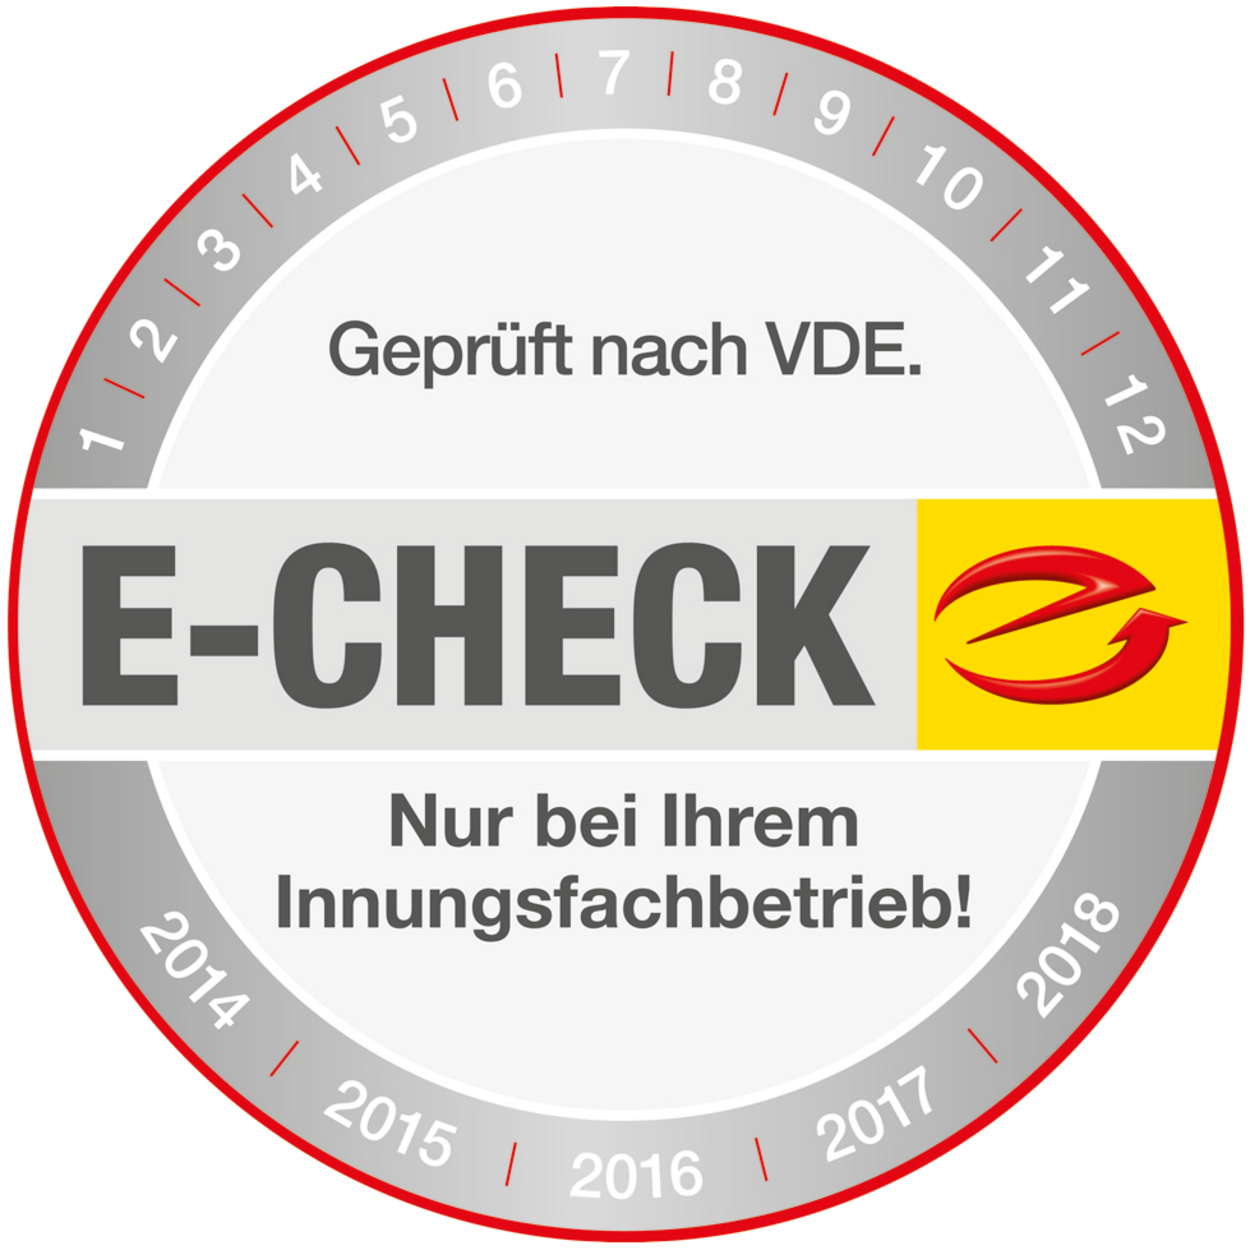 Der E-Check bei Christian Kley - Elektrotechnik UG in Trittau